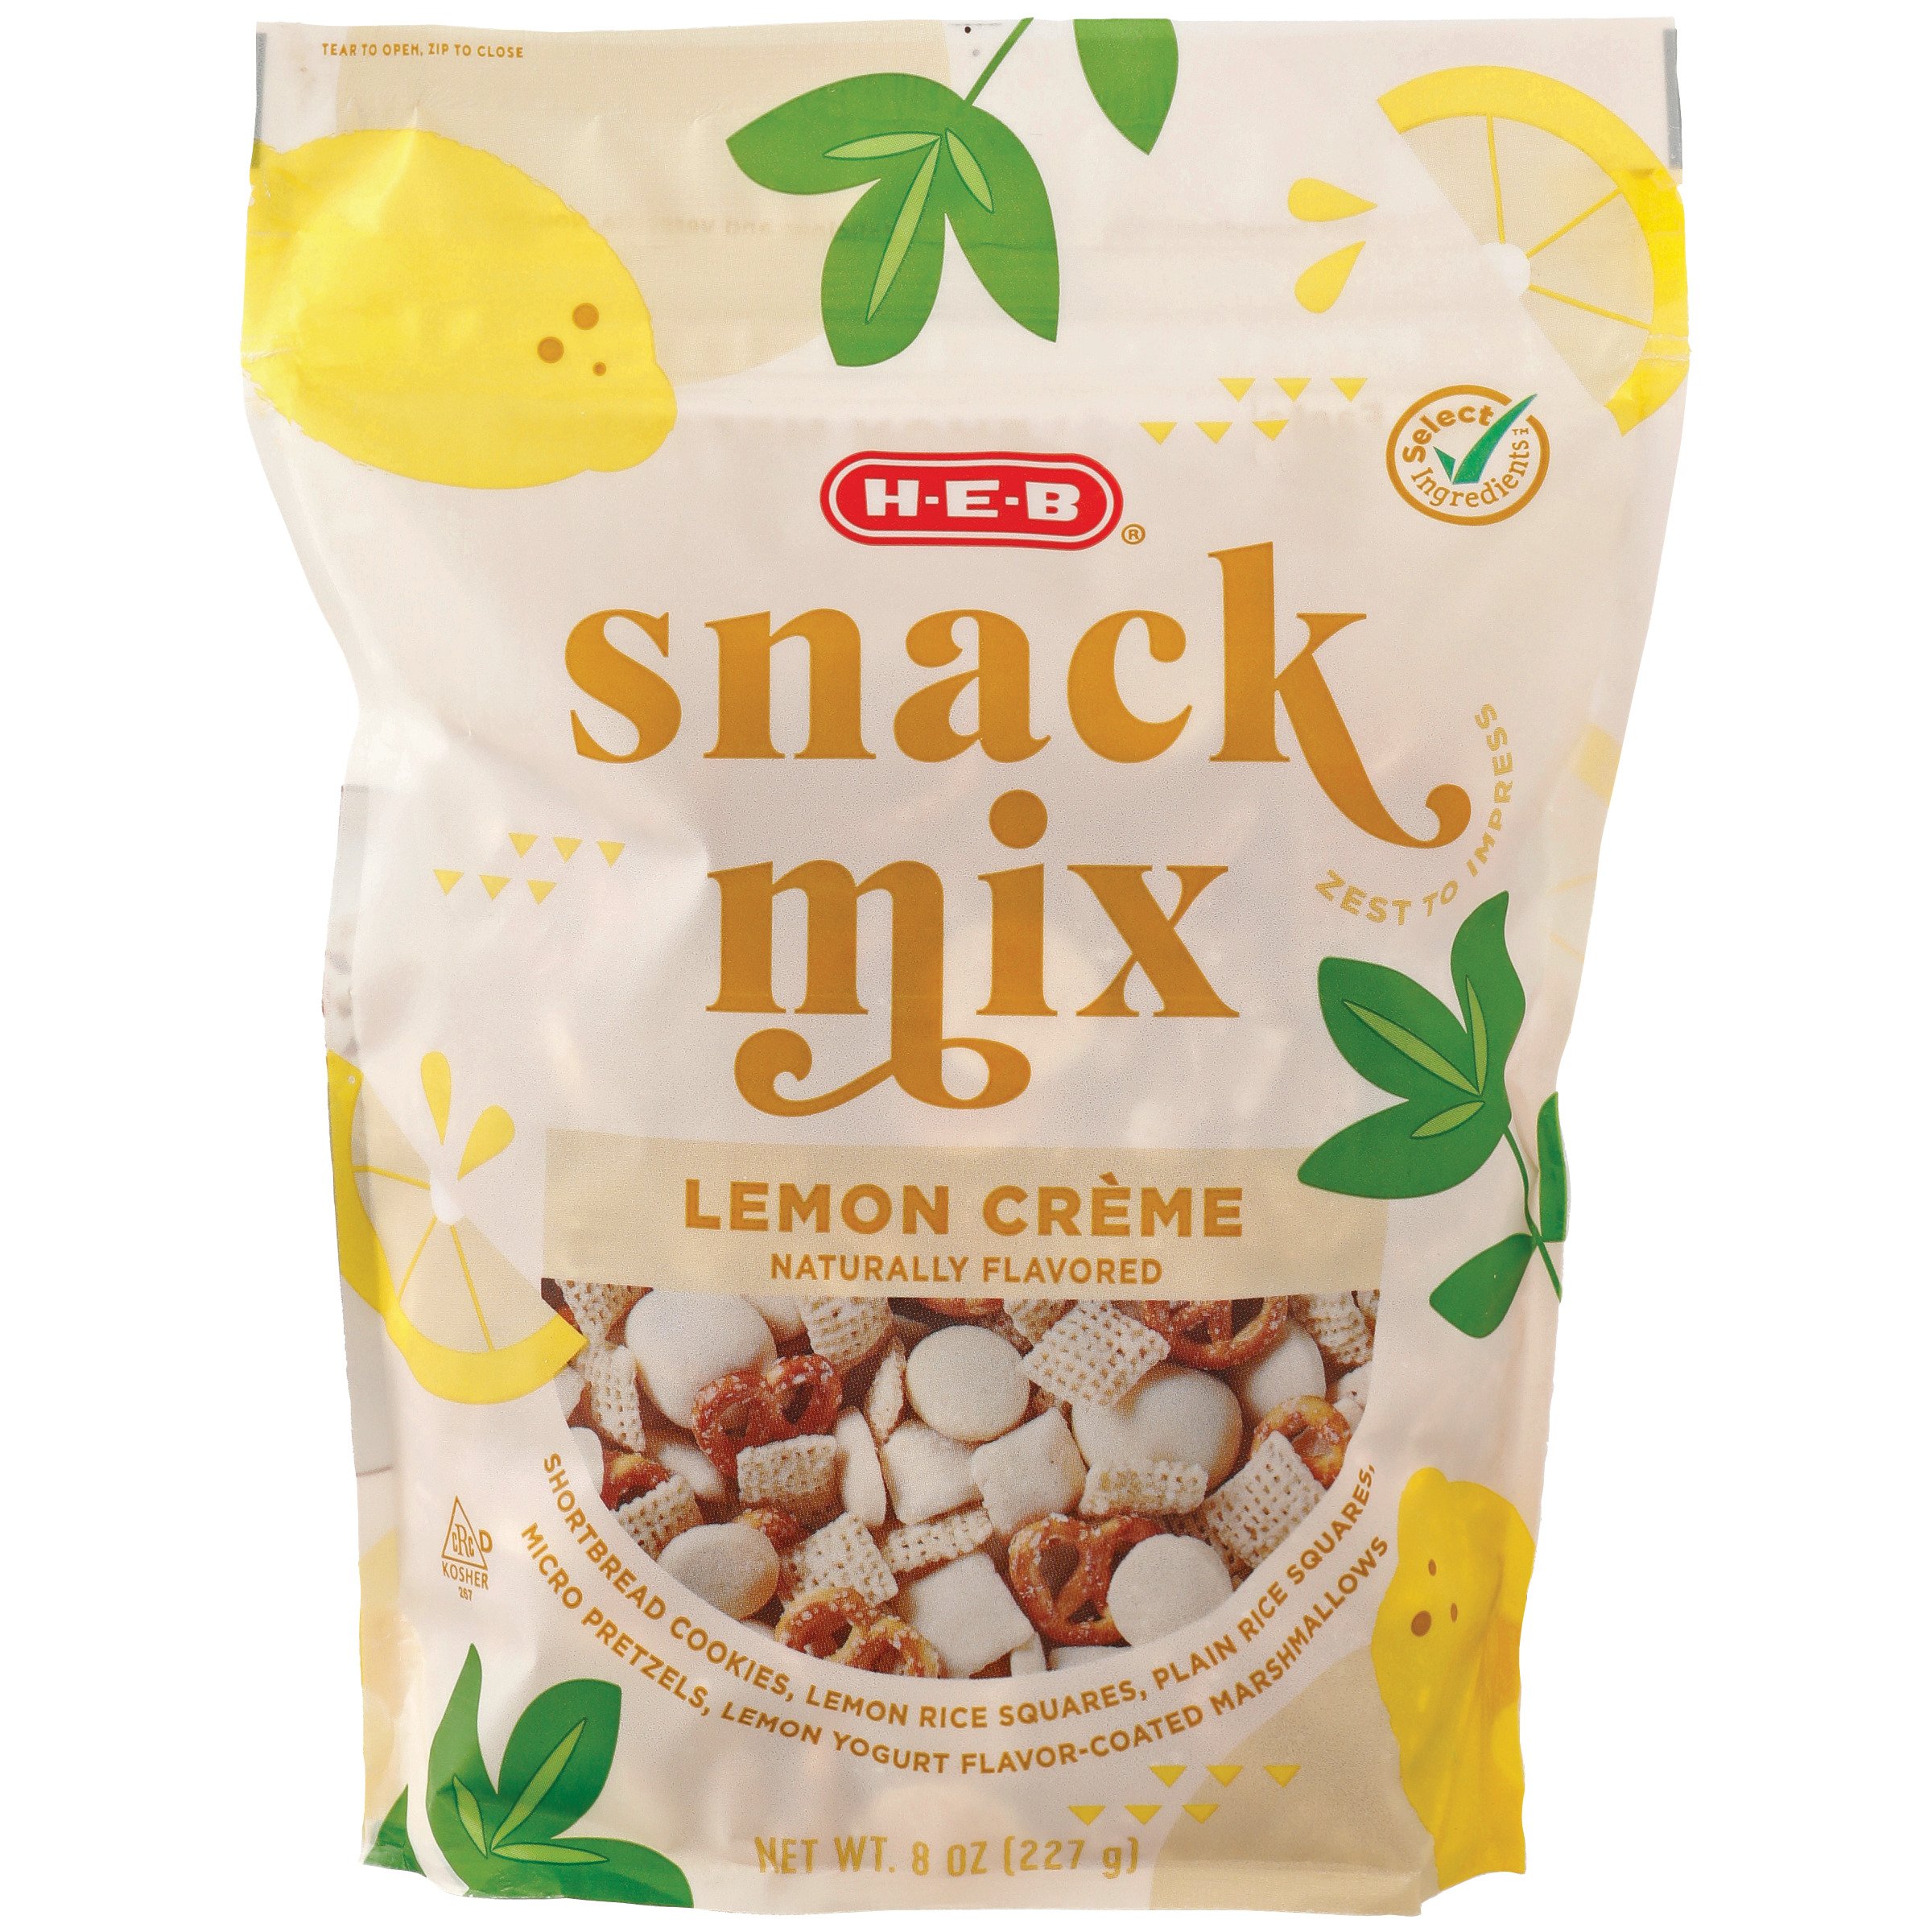 H-E-B Lemon Crème Snack Mix - Shop Trail Mix at H-E-B